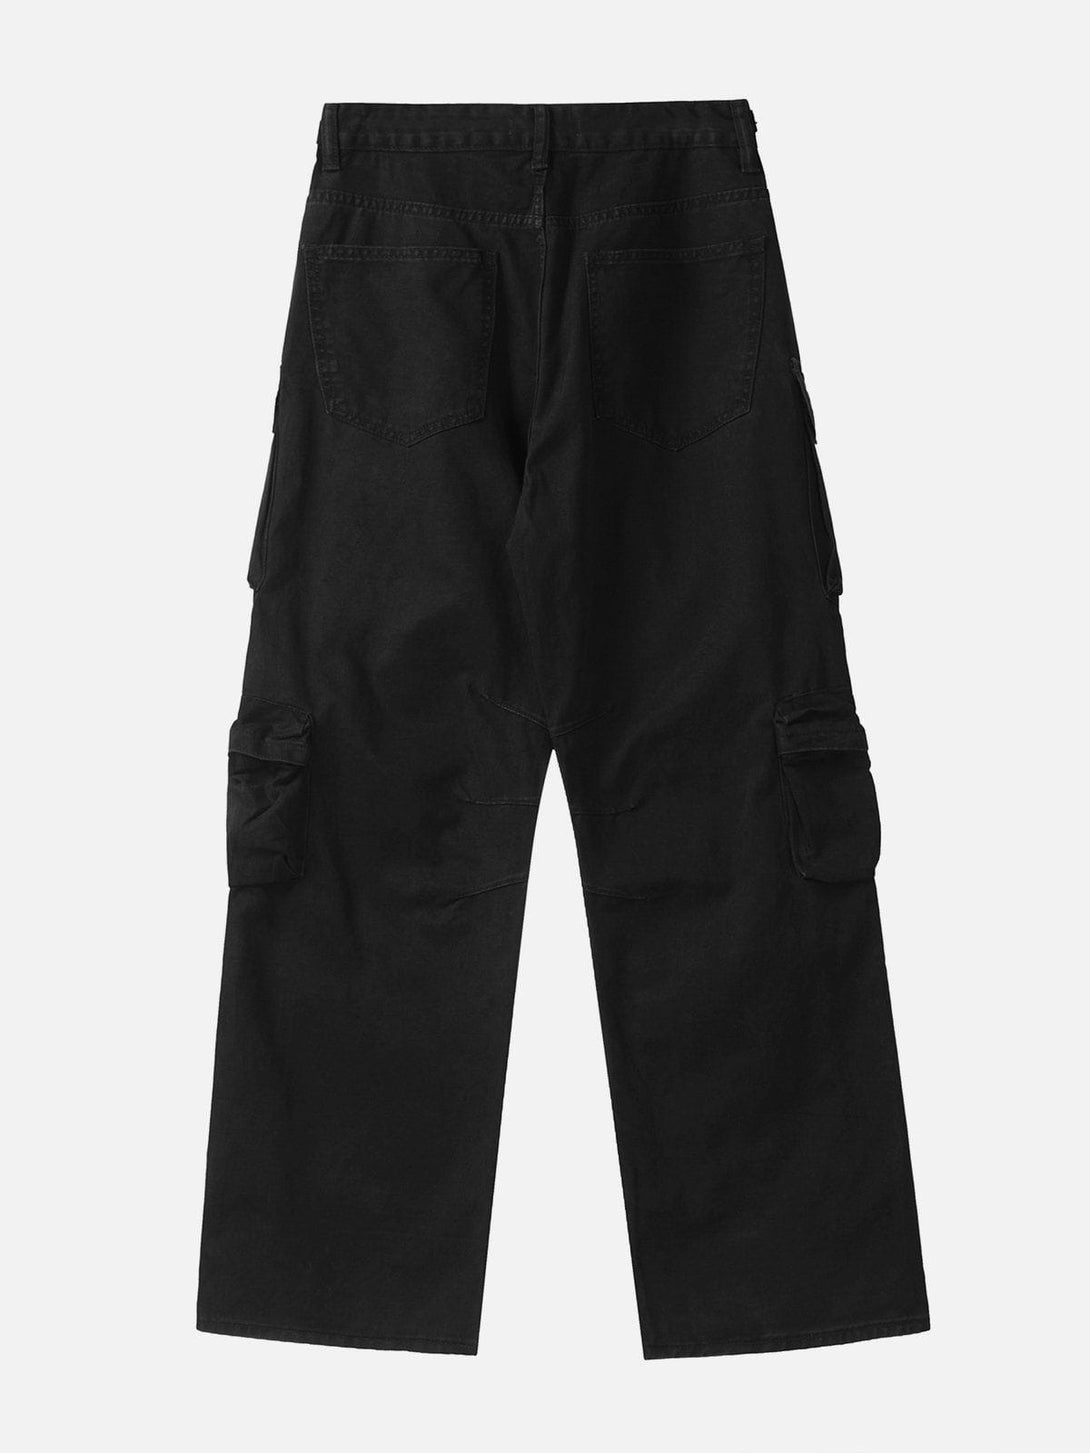 Aelfric Eden Vintage Multi-pocket Cargo Pants – Aelfric eden